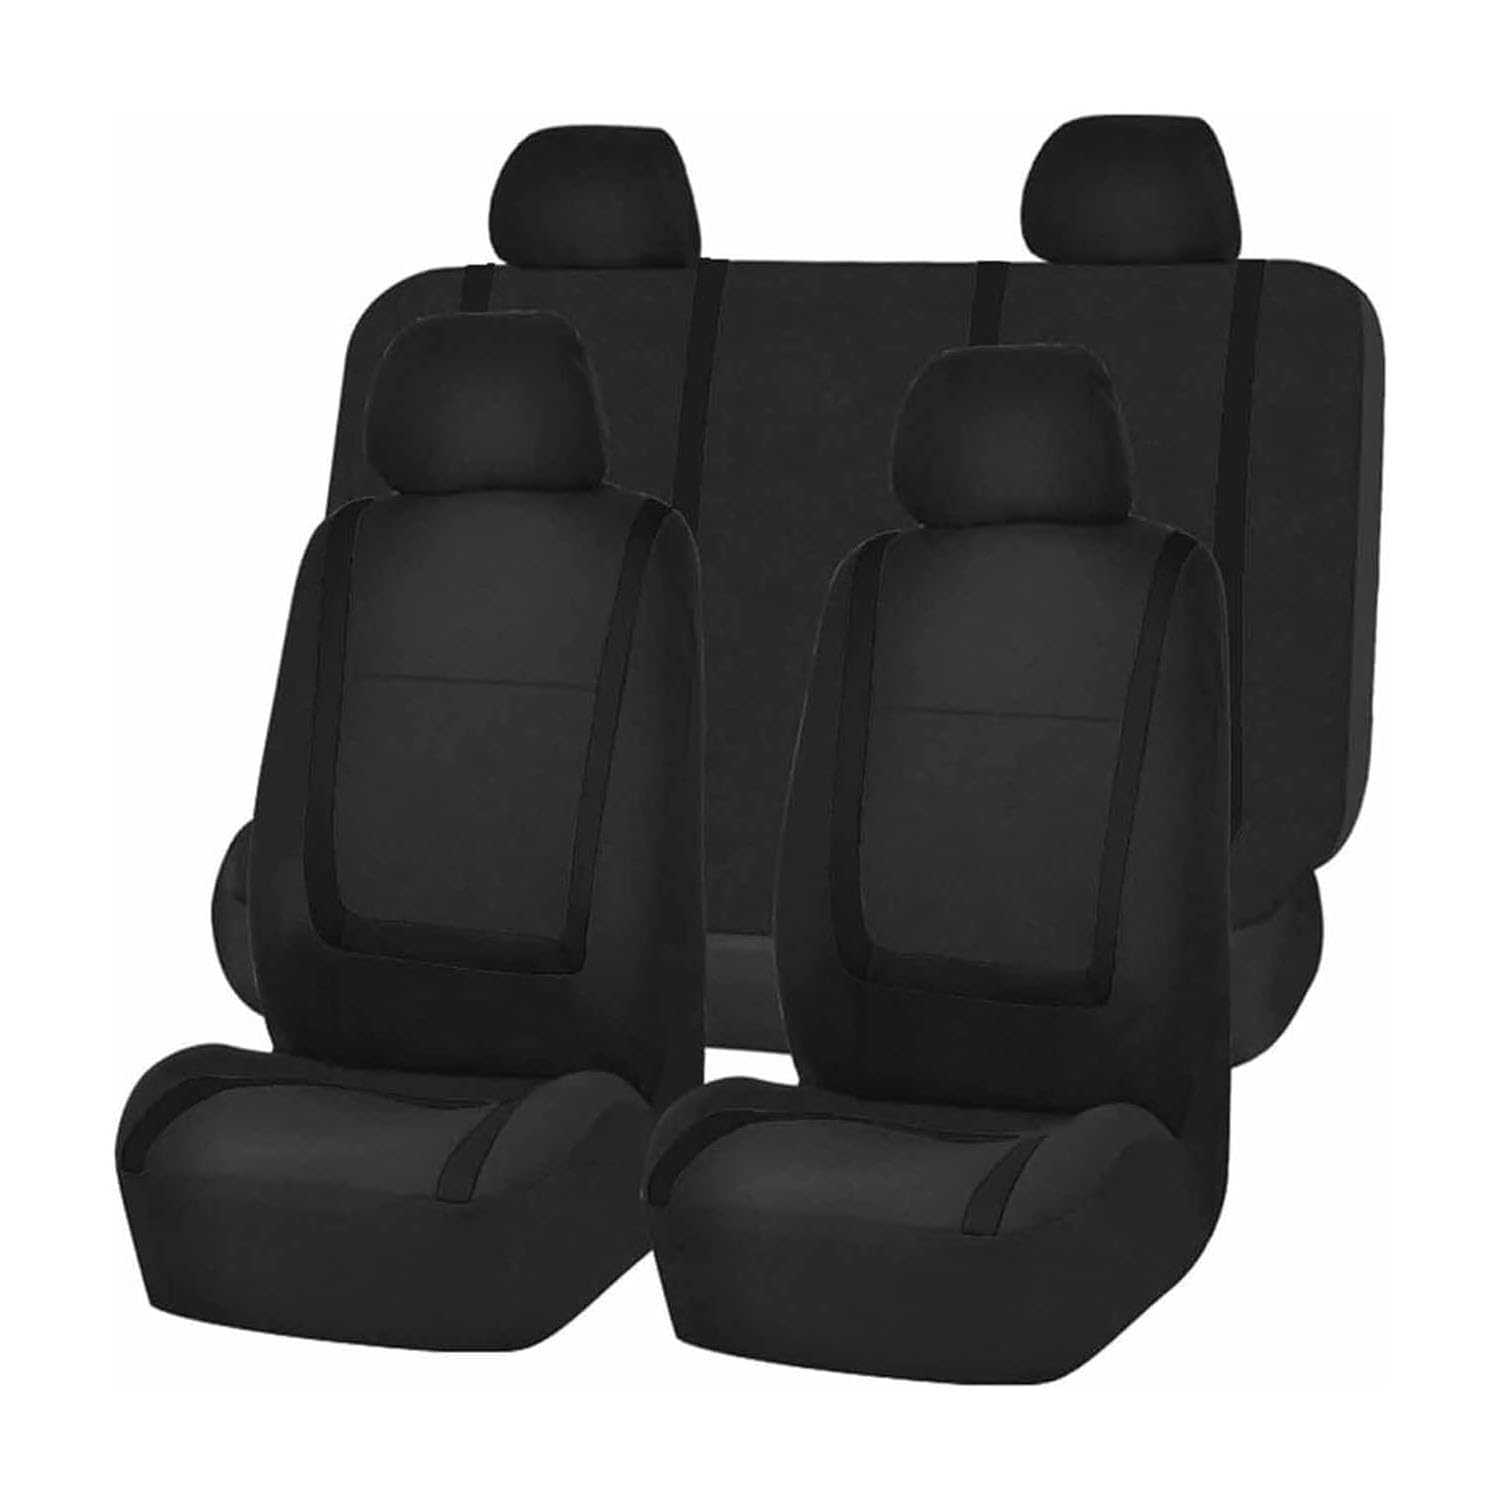 VewZJJ Auto Sitzbezügesets für Hyundai i10/ i20/i30/i40,Komfortabler Atmungsaktiv Sitzschoner Satz Sitzbezug,rutschfest Wasserdichter Vorne RüCkbank Autositz SitzbezüGe,Black von VewZJJ